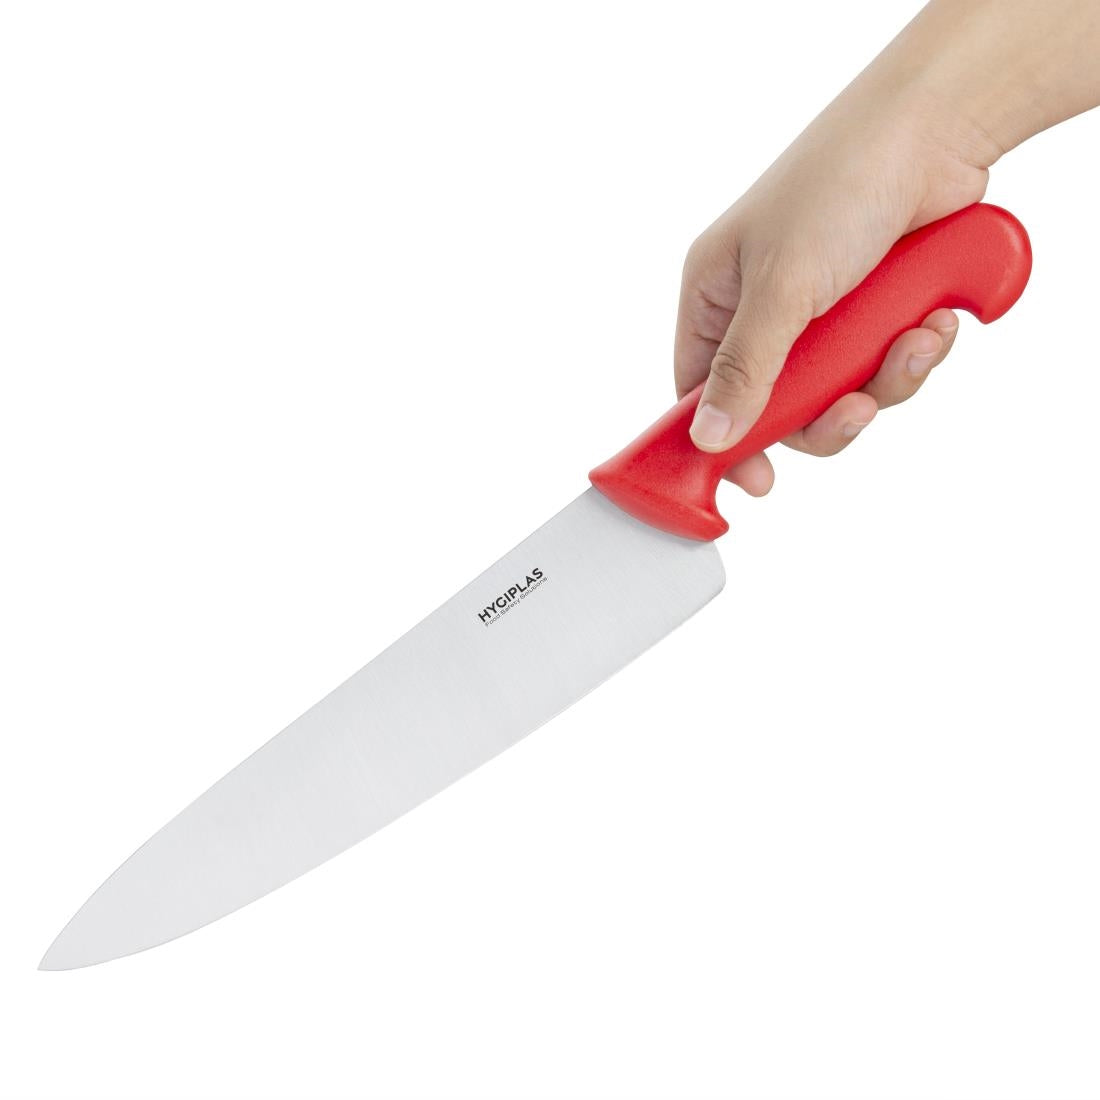 C886 Hygiplas Chefs Knife Red 25.5cm JD Catering Equipment Solutions Ltd